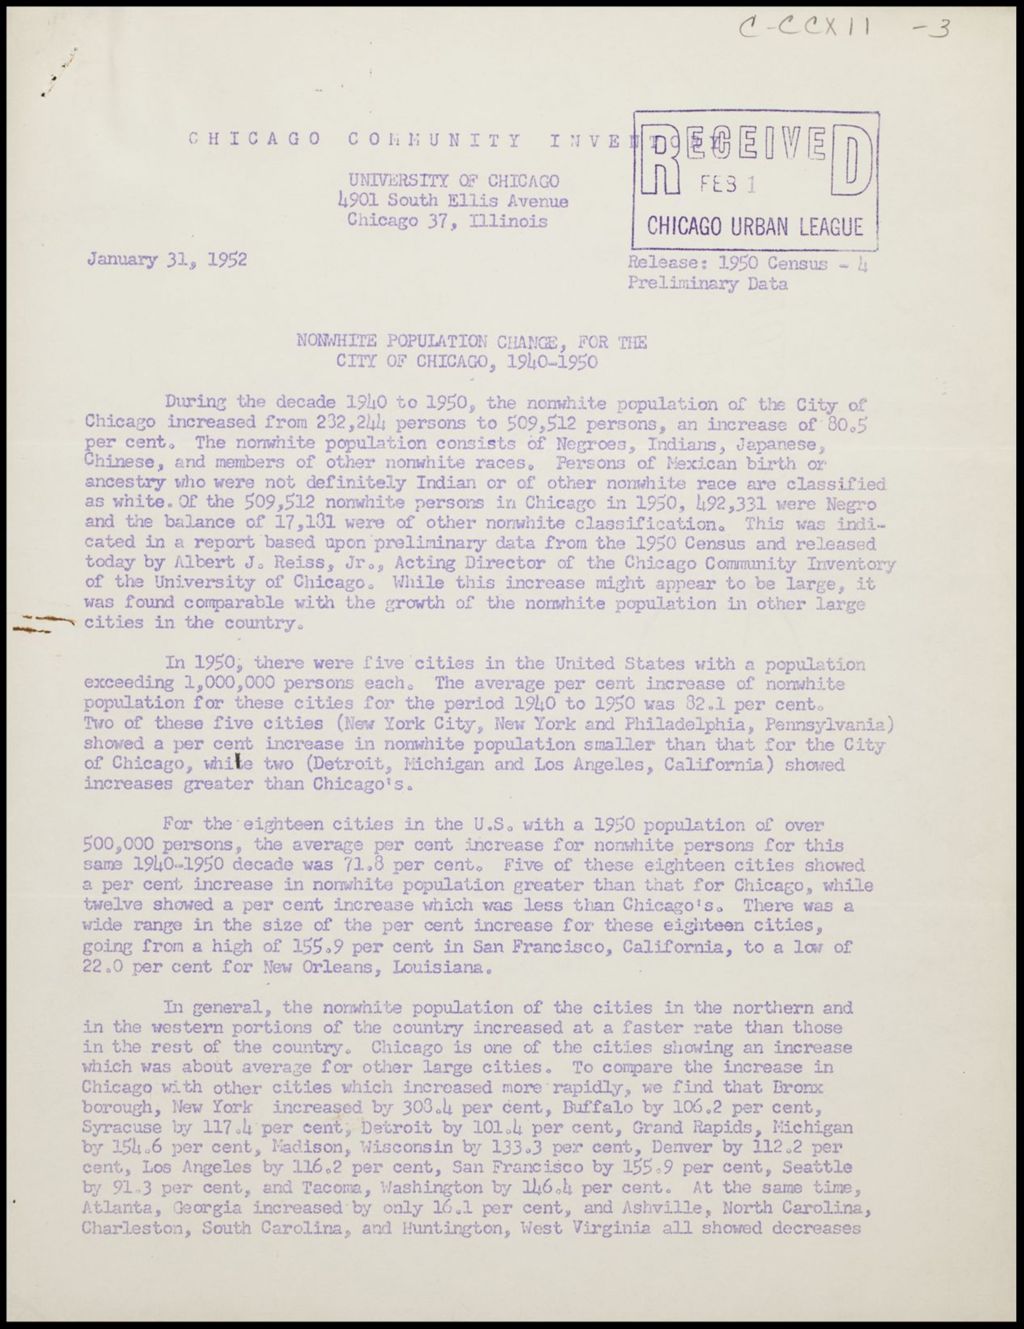 National Headquarters Evaluation Studies of the Chicago, 1955 (Folder III-2450)